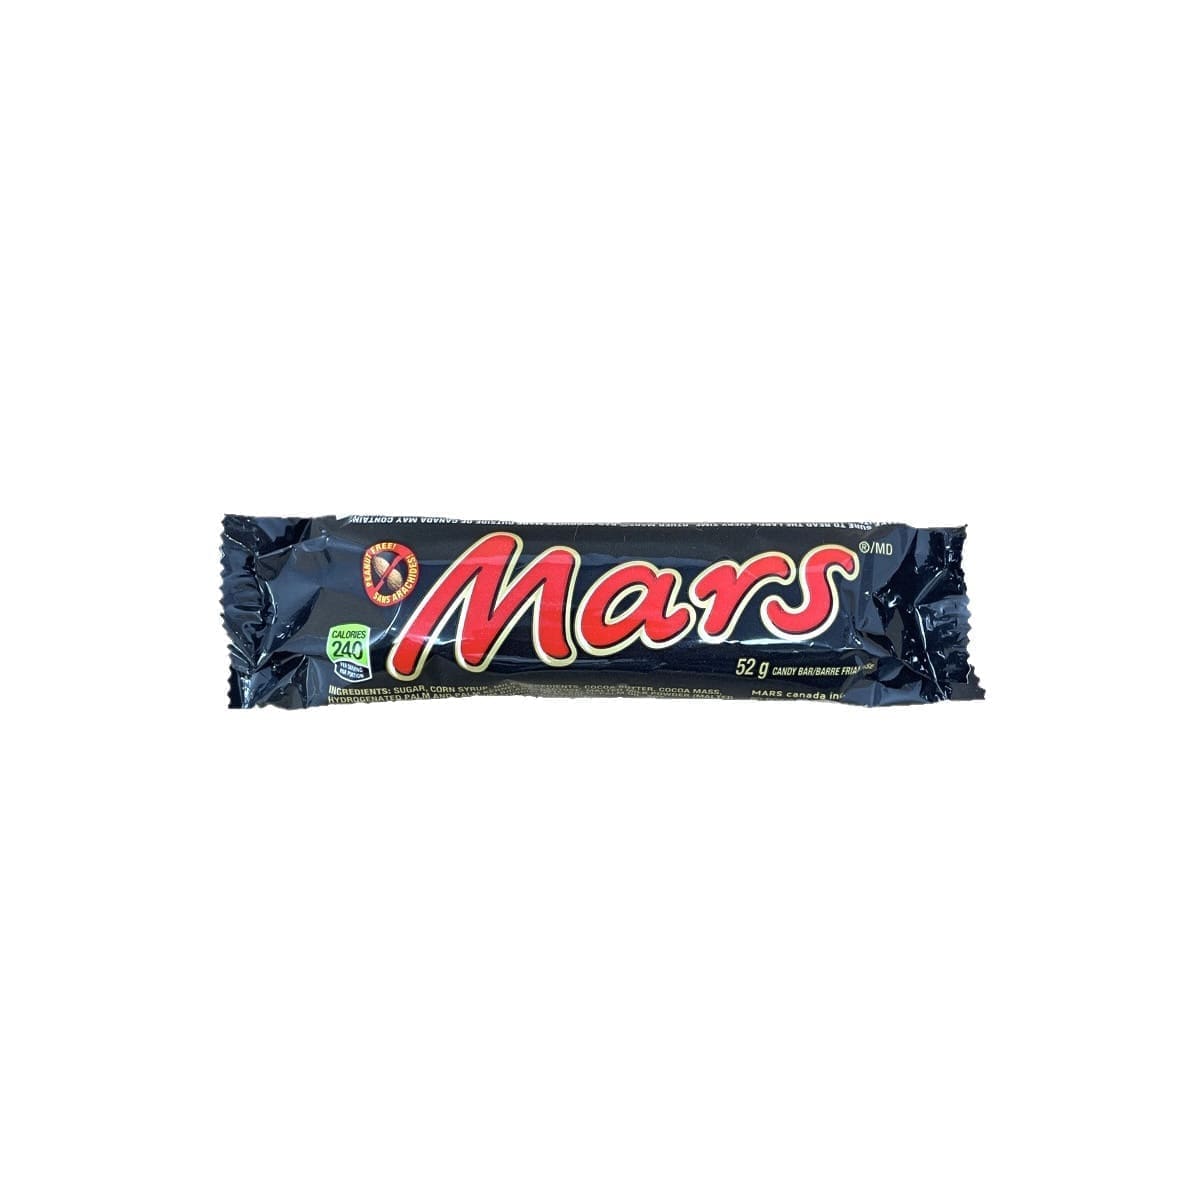 Mars Candy Bar (52g)